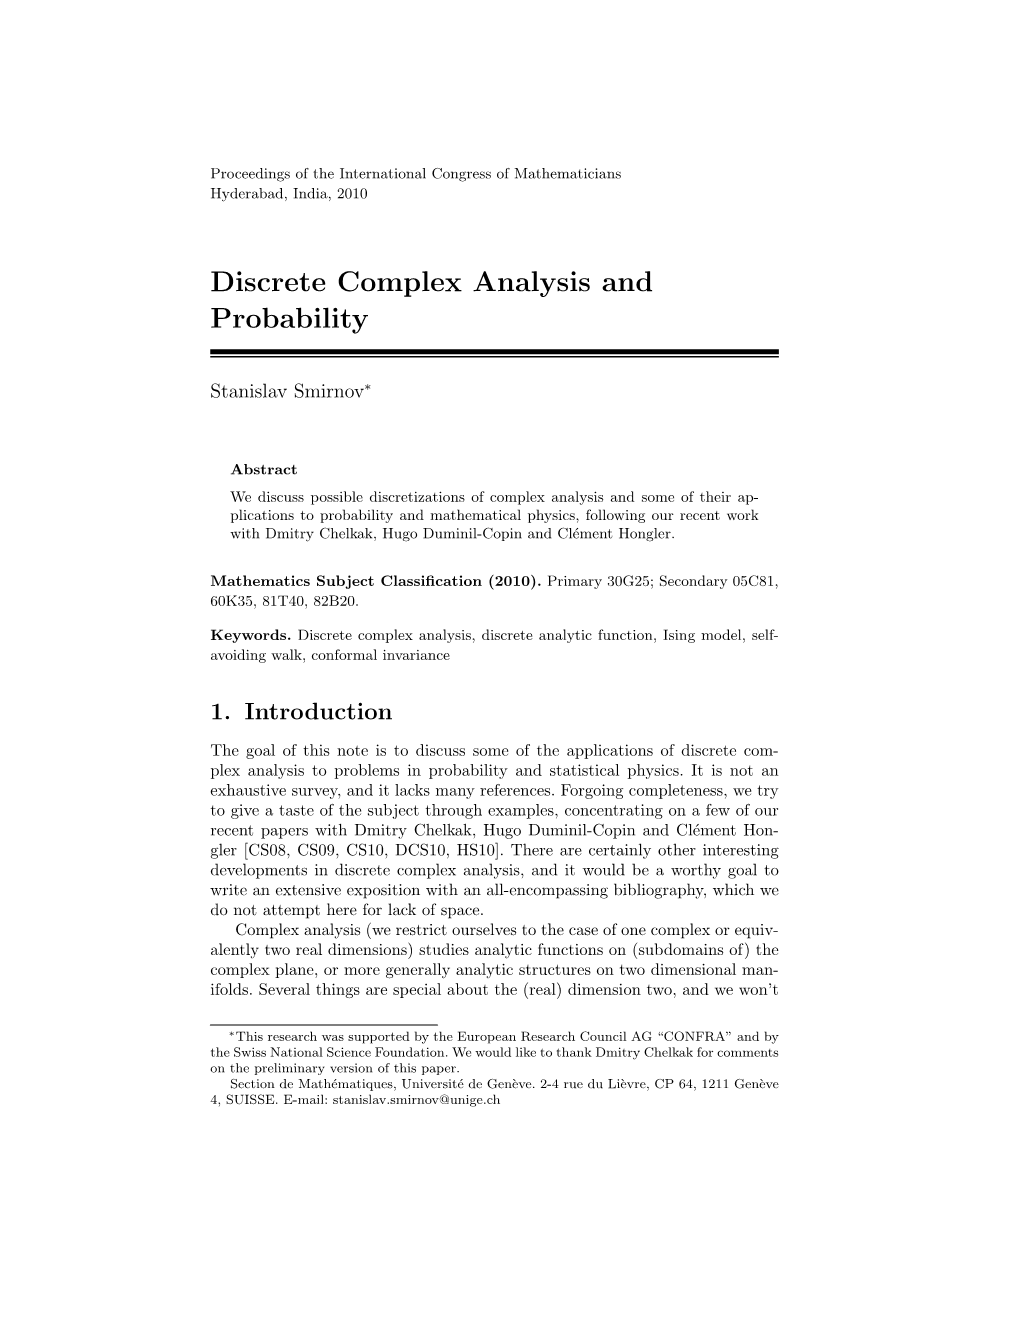 Discrete Complex Analysis and Probability